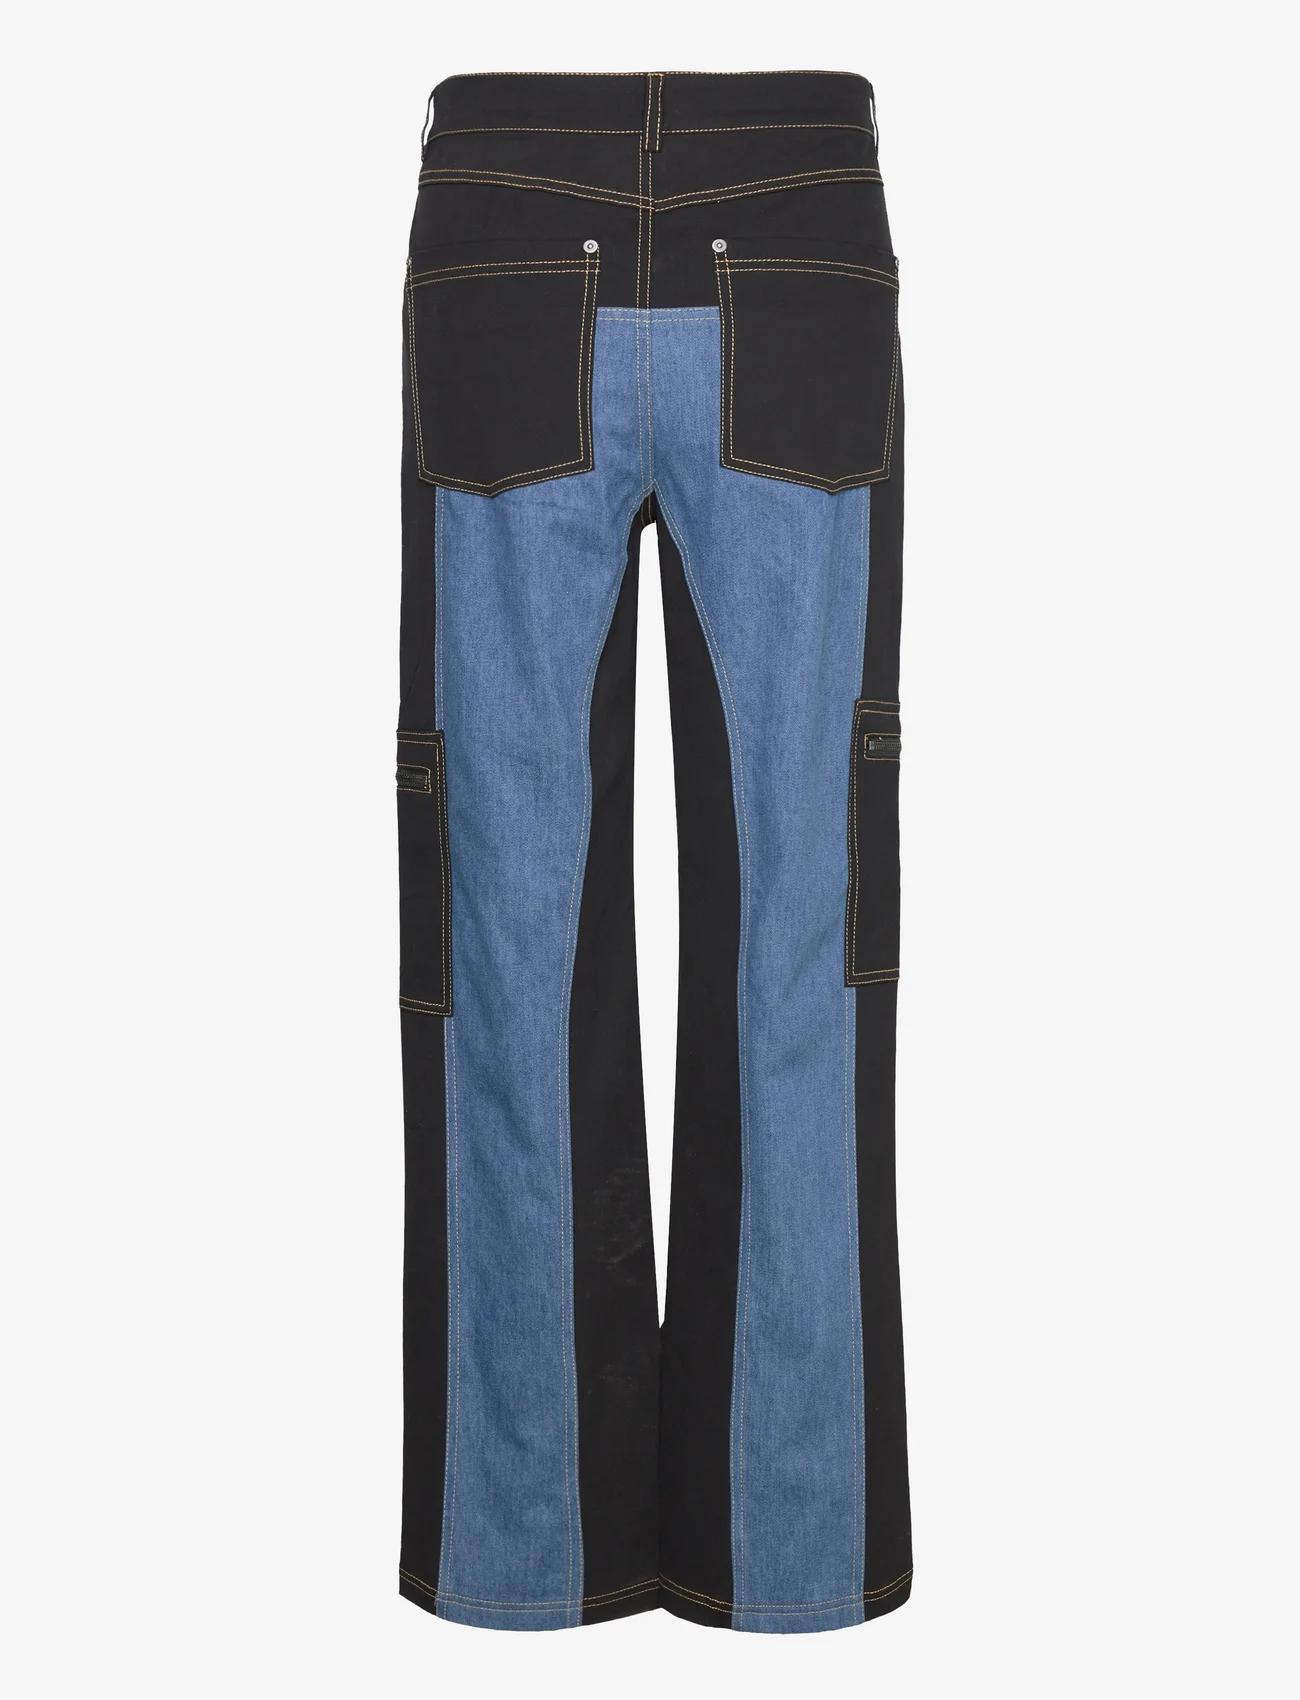 Sofie Schnoor - Trousers - wide leg jeans - black - 1